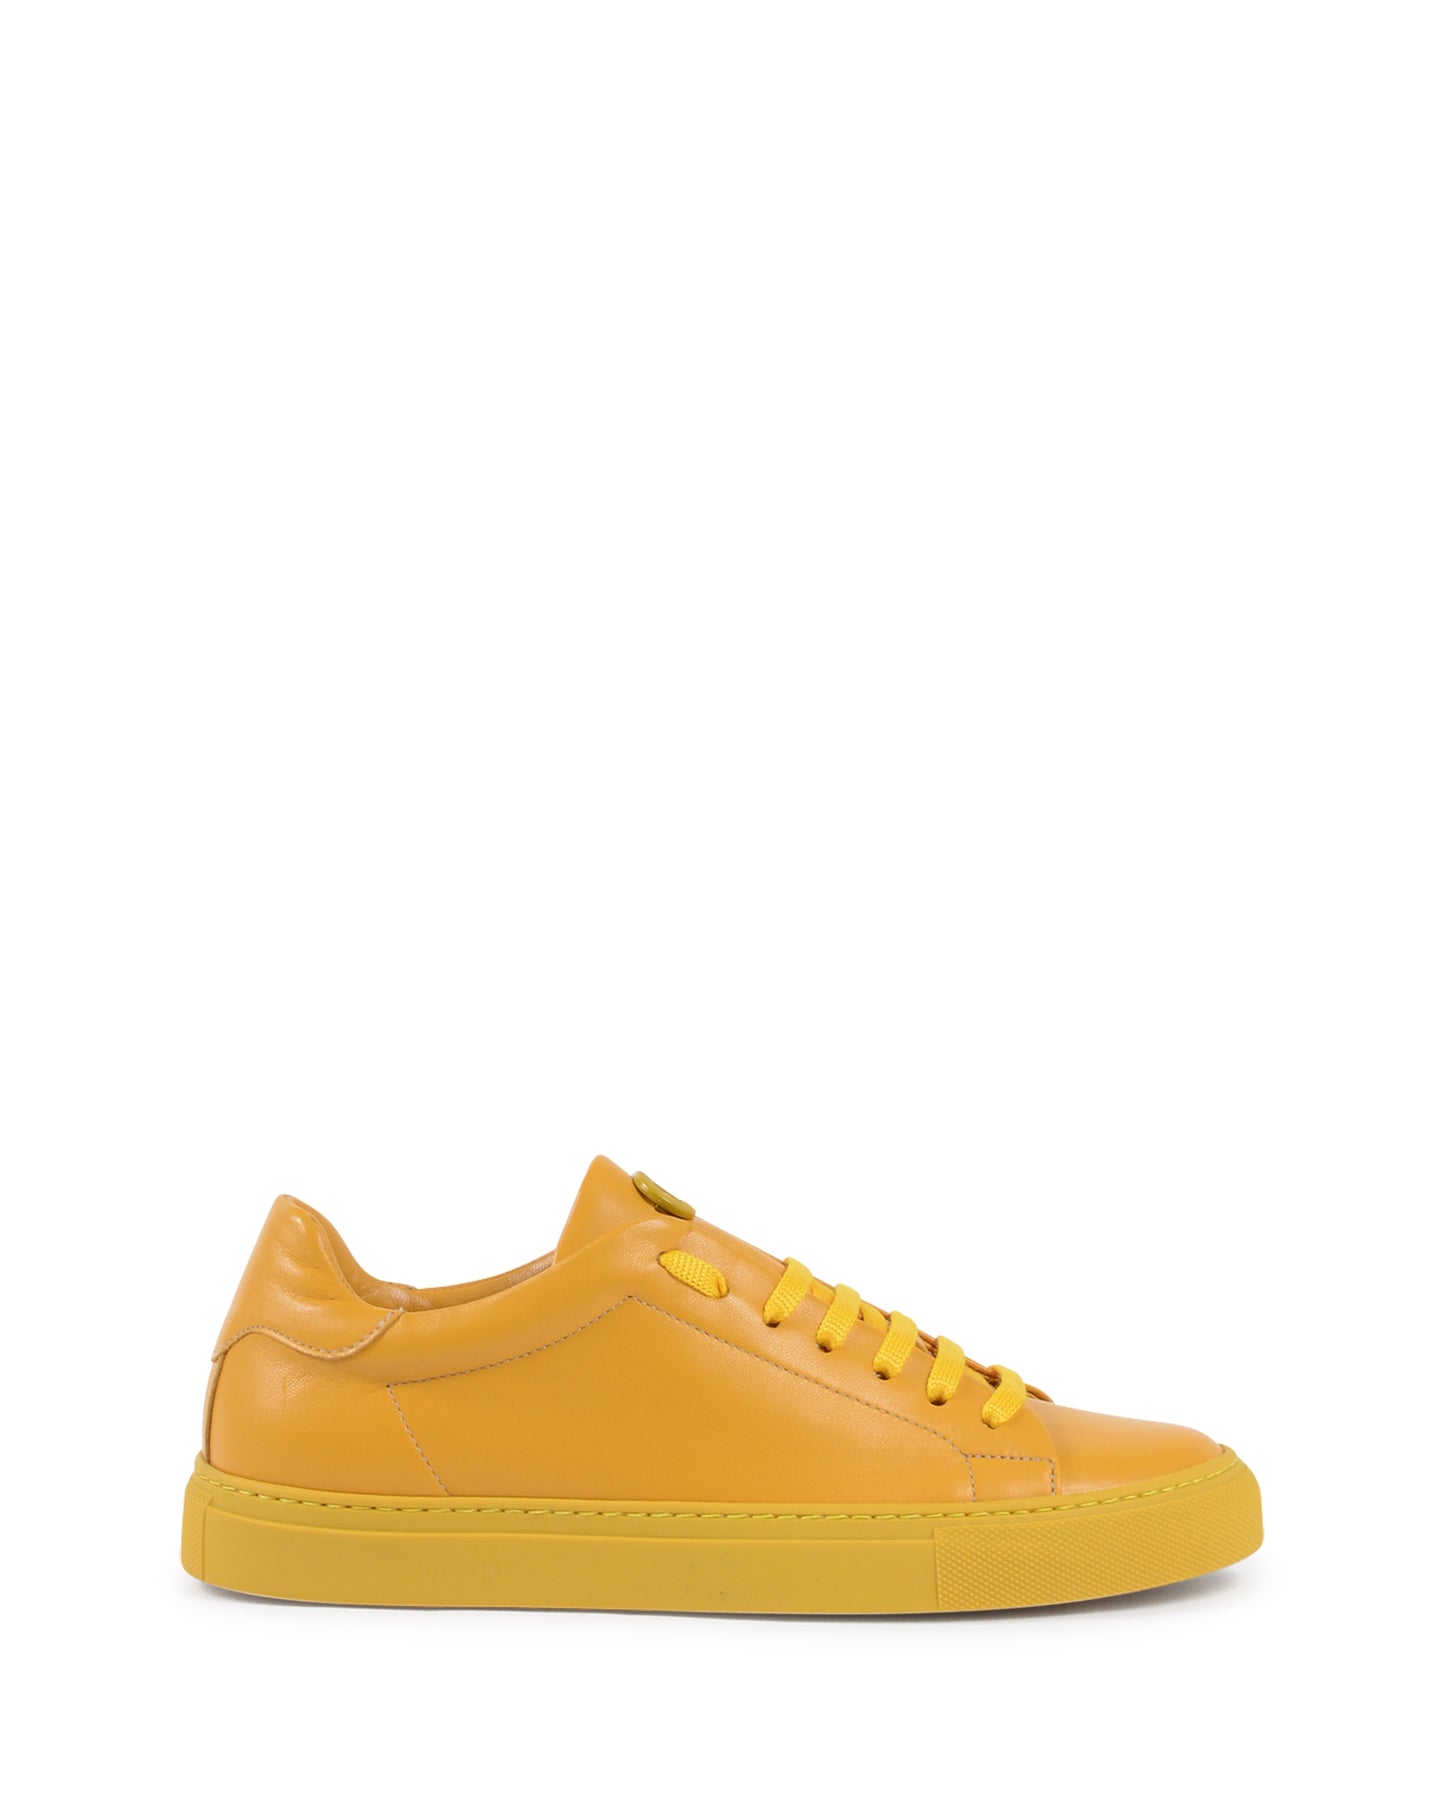 Dedication Sneaker - Yellow